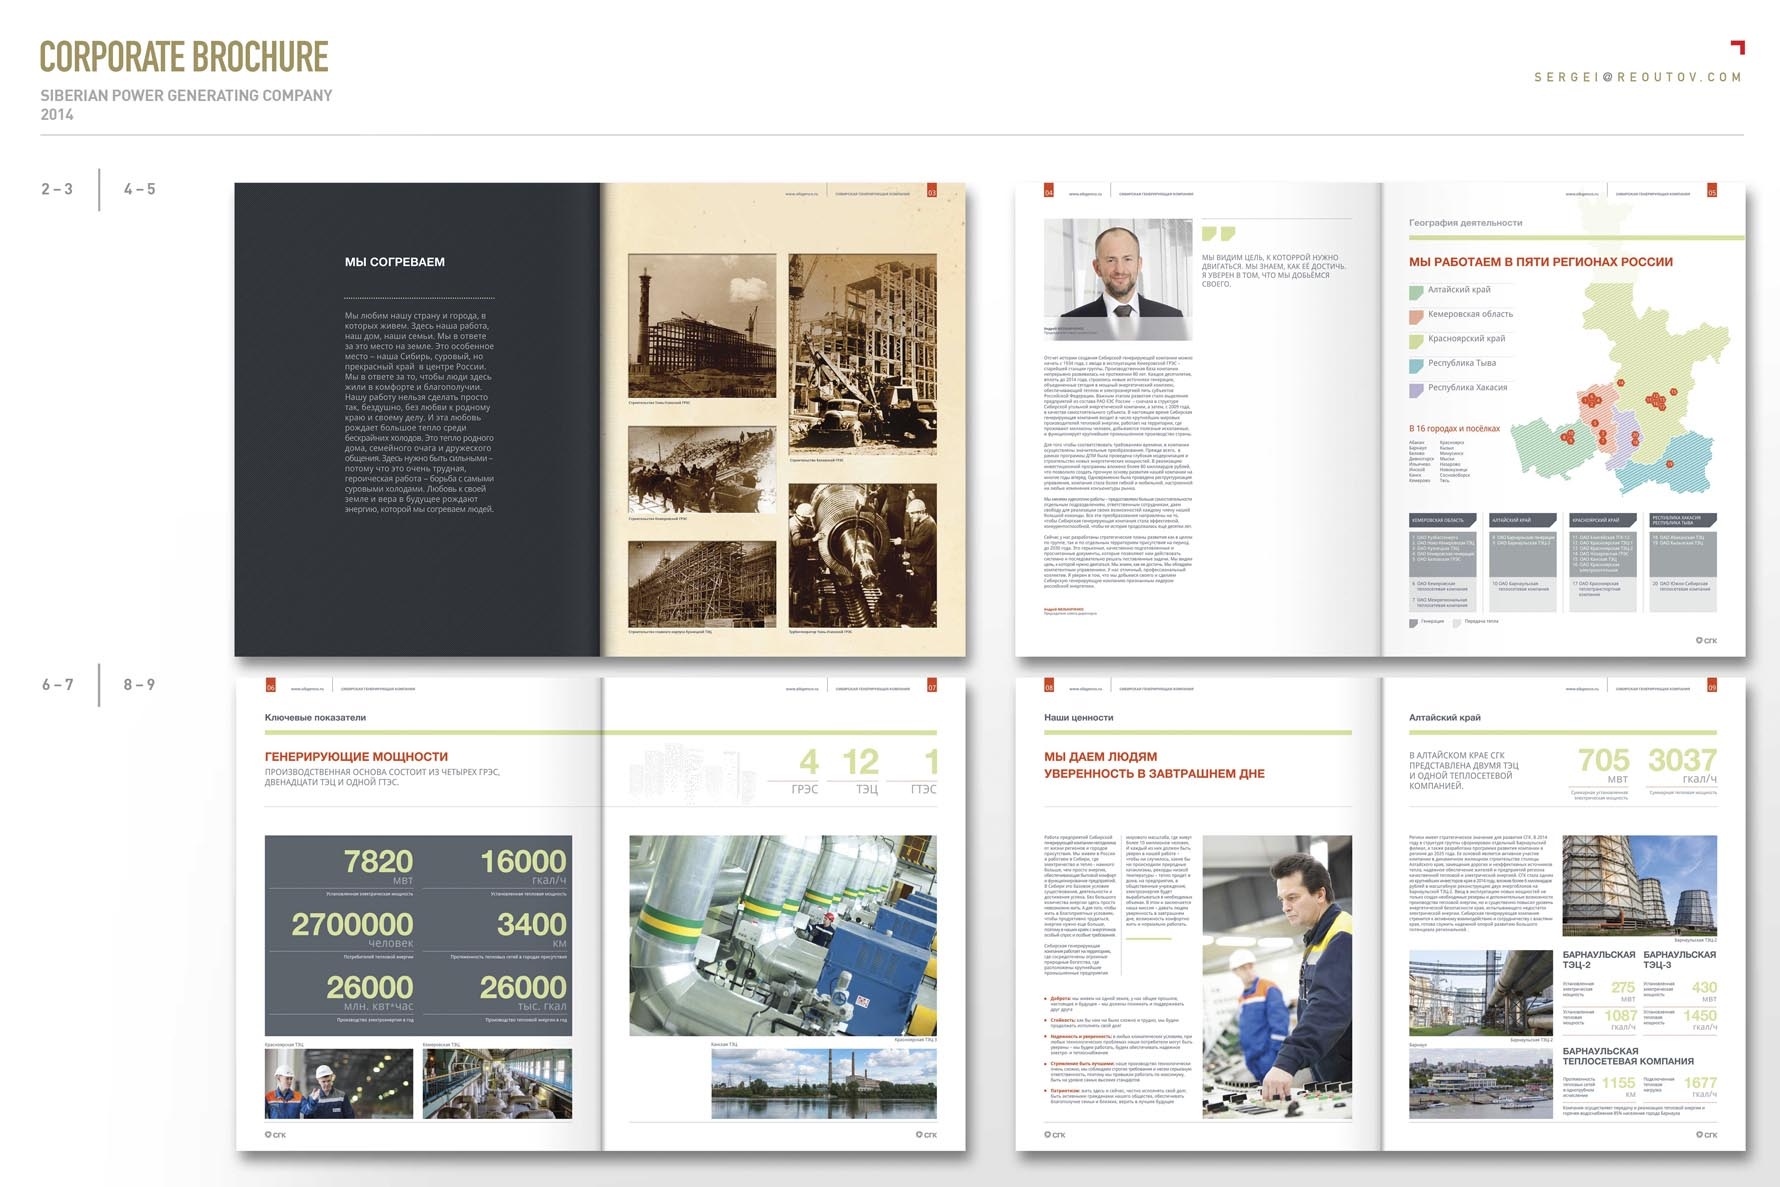 SGK corporate brochure concept